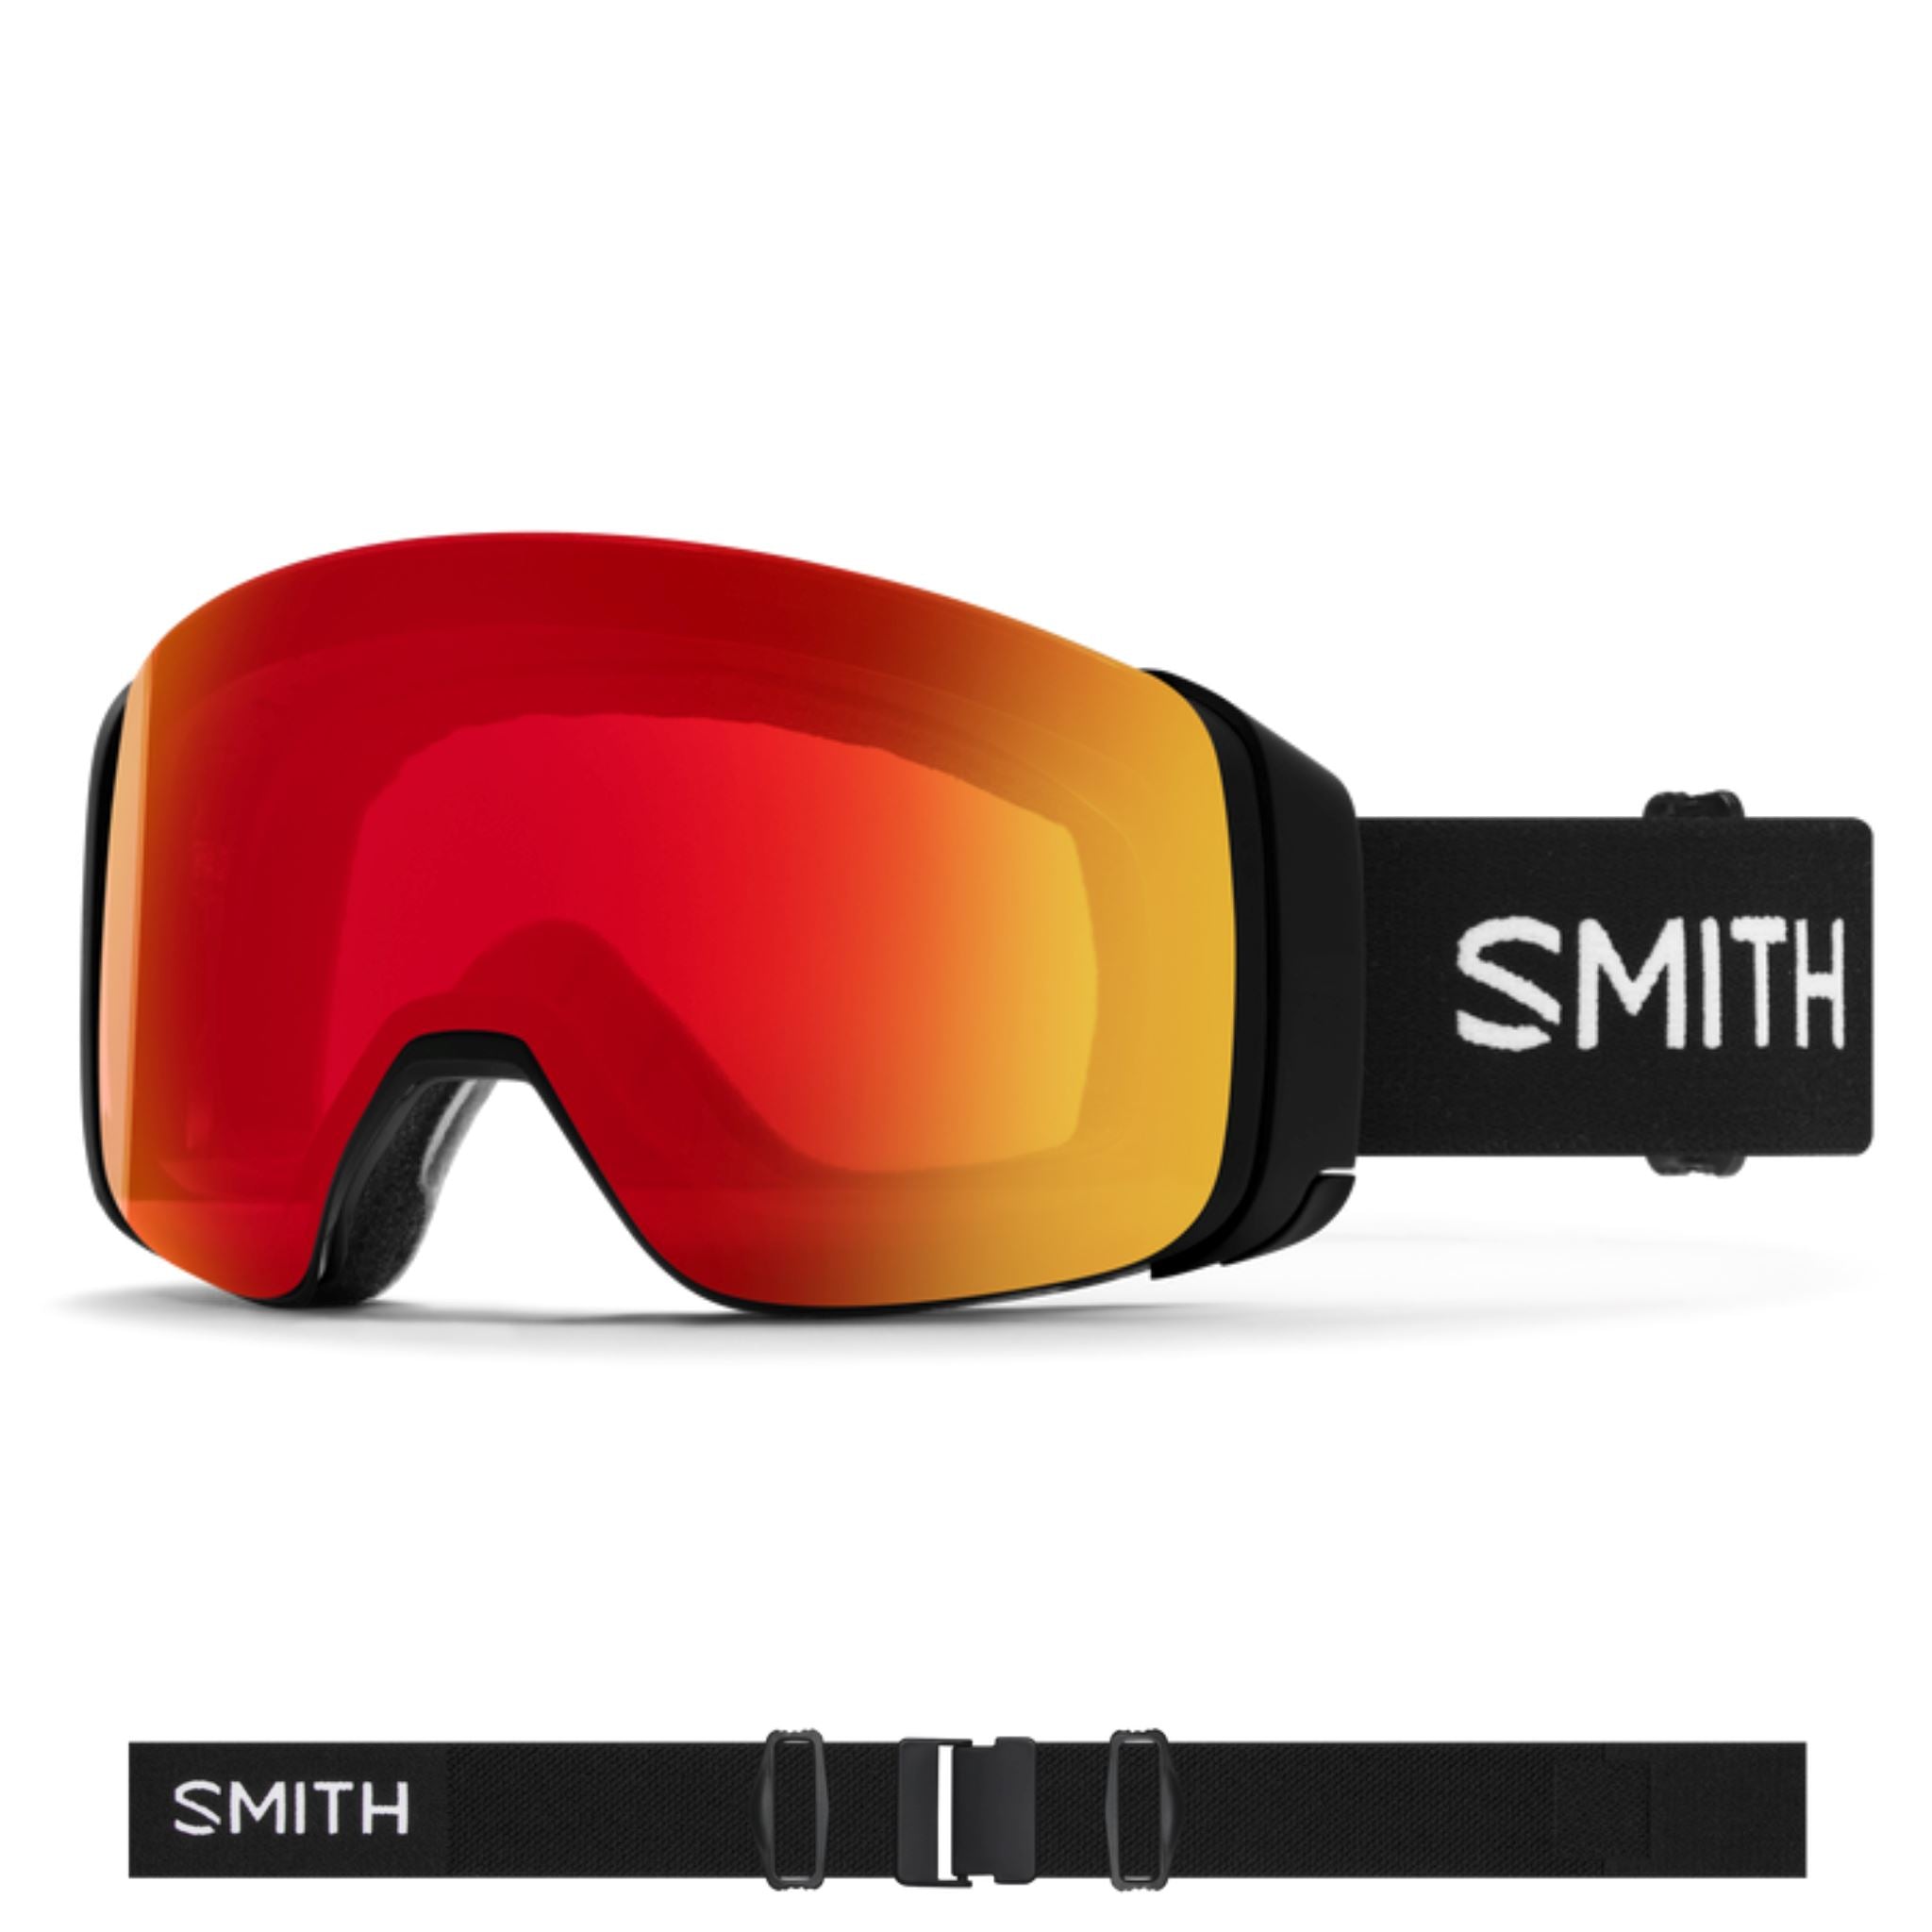 Smith 4D MAG Goggles (Medium Fit) - Black ChromaPop Photochromic